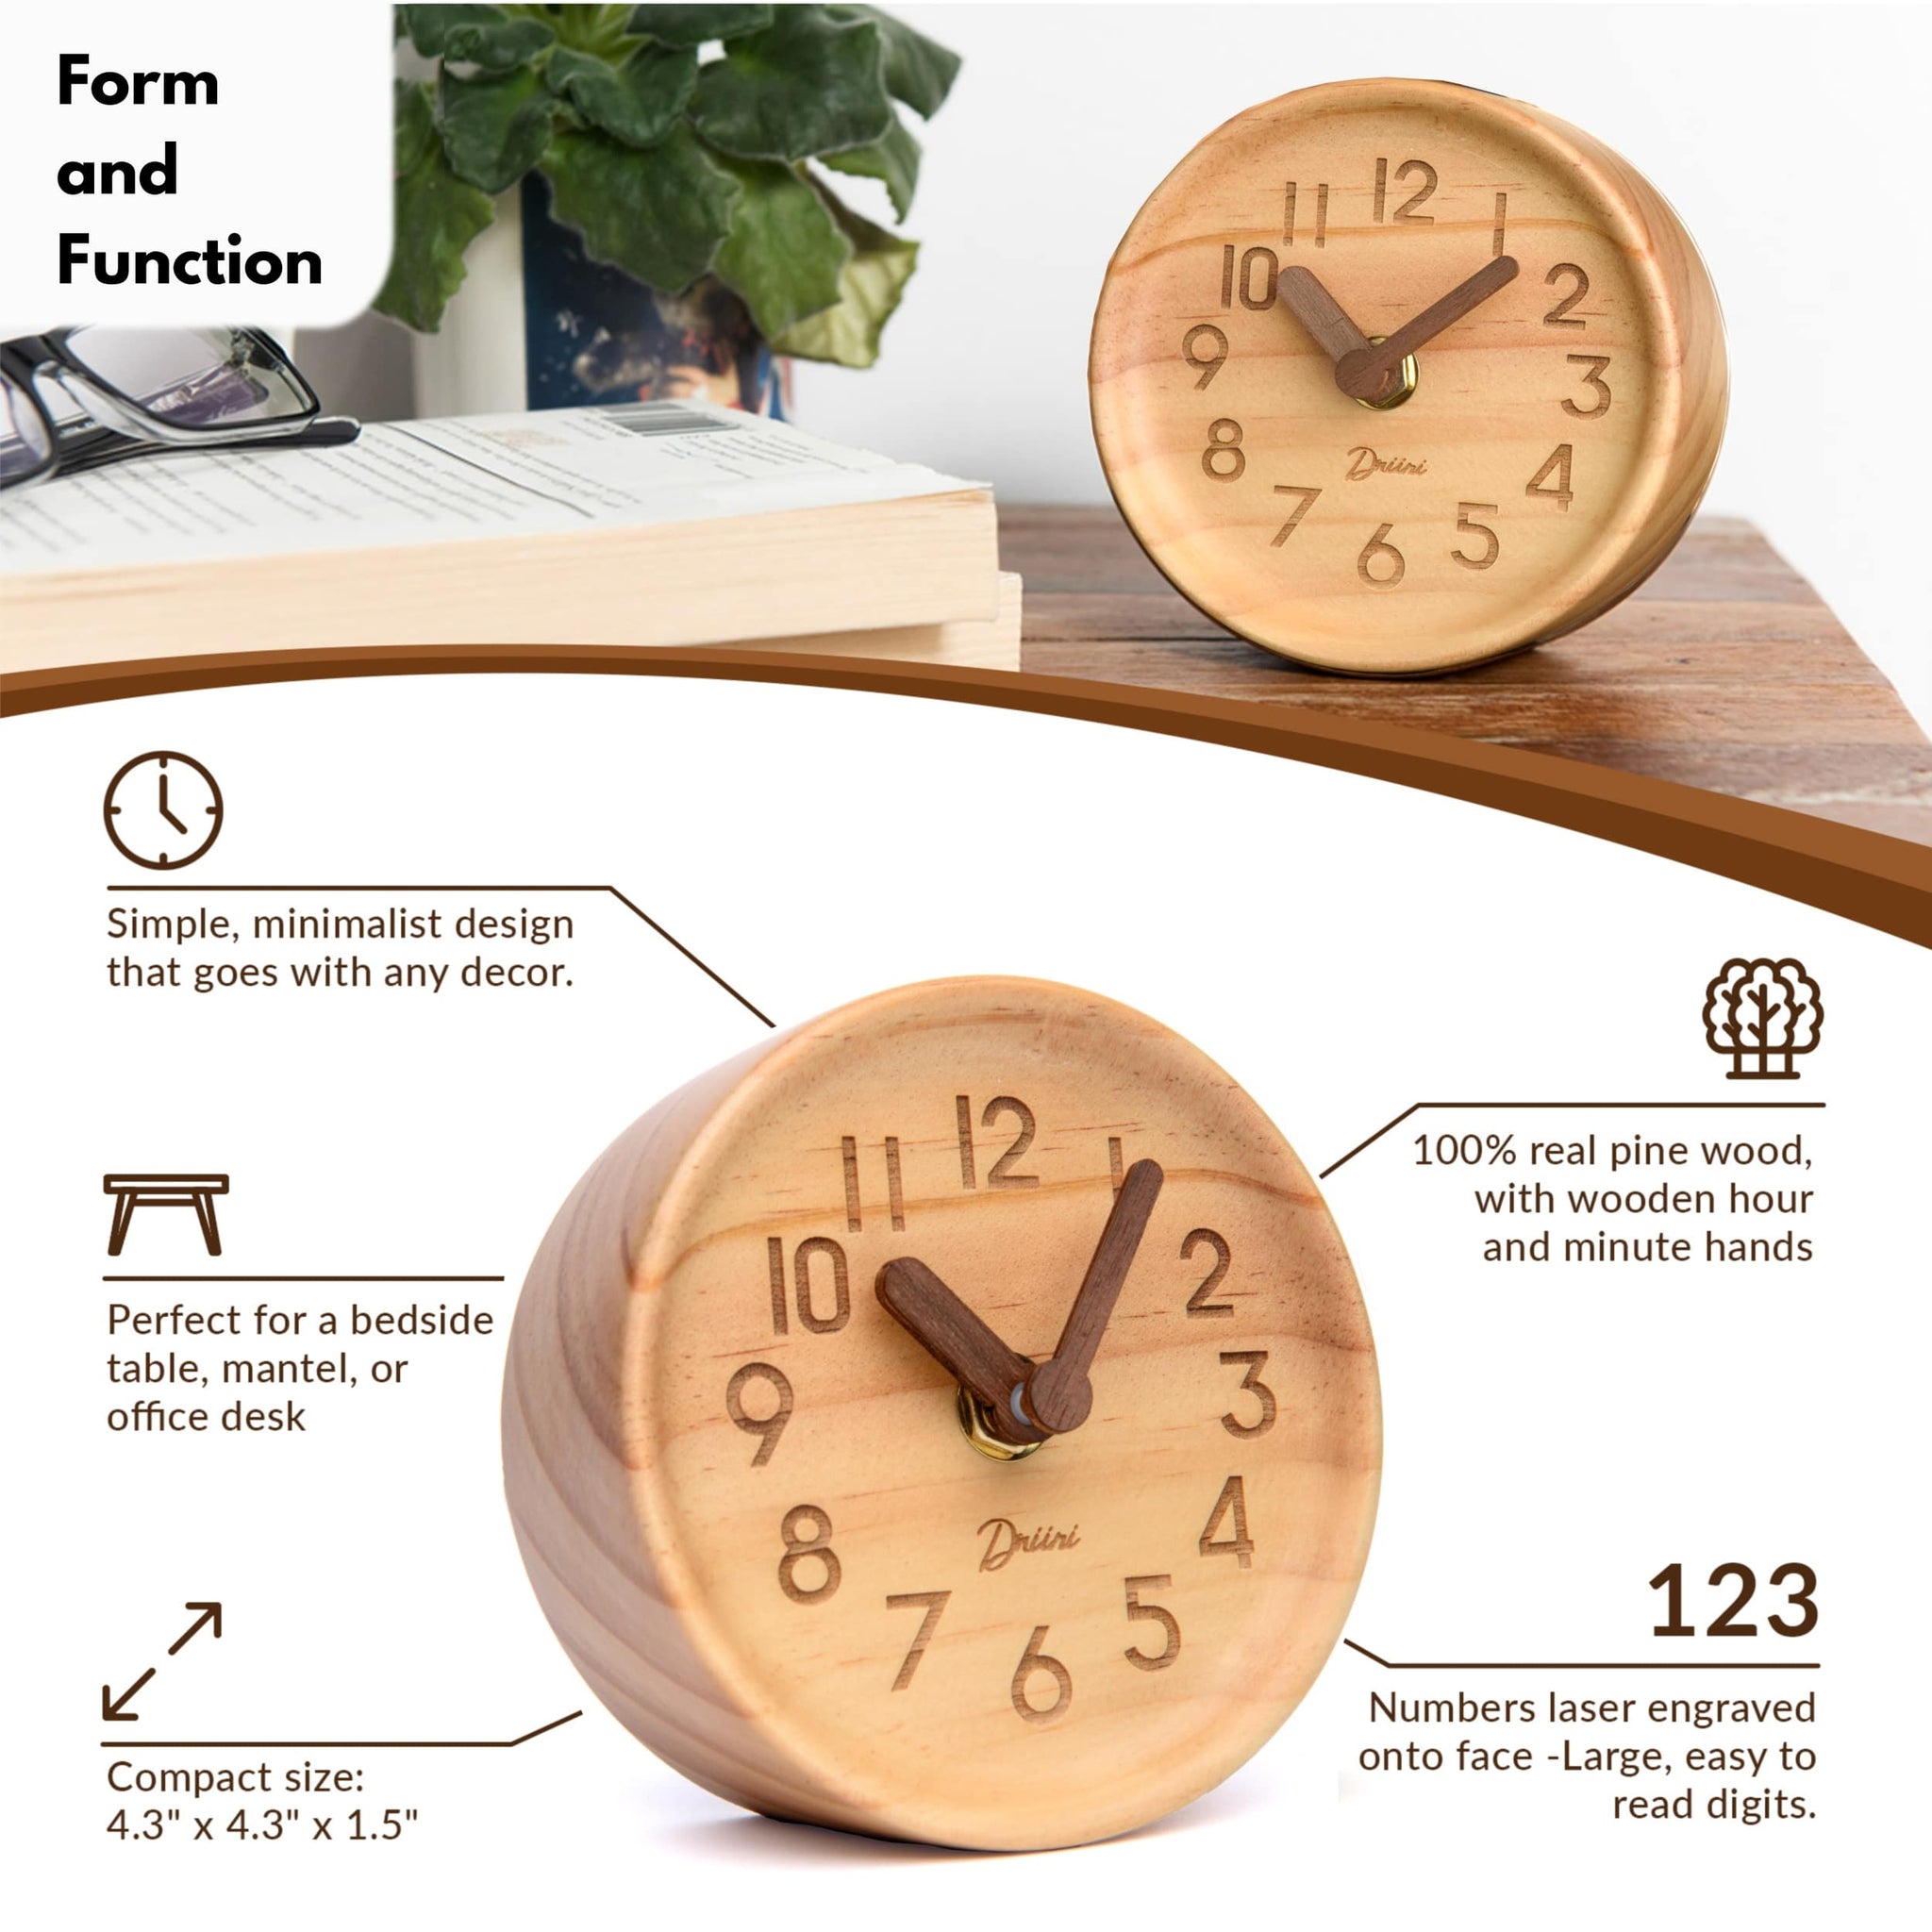 Driini Wooden Desk & Table Analog Clock - Made of Genuine Pine (Light)